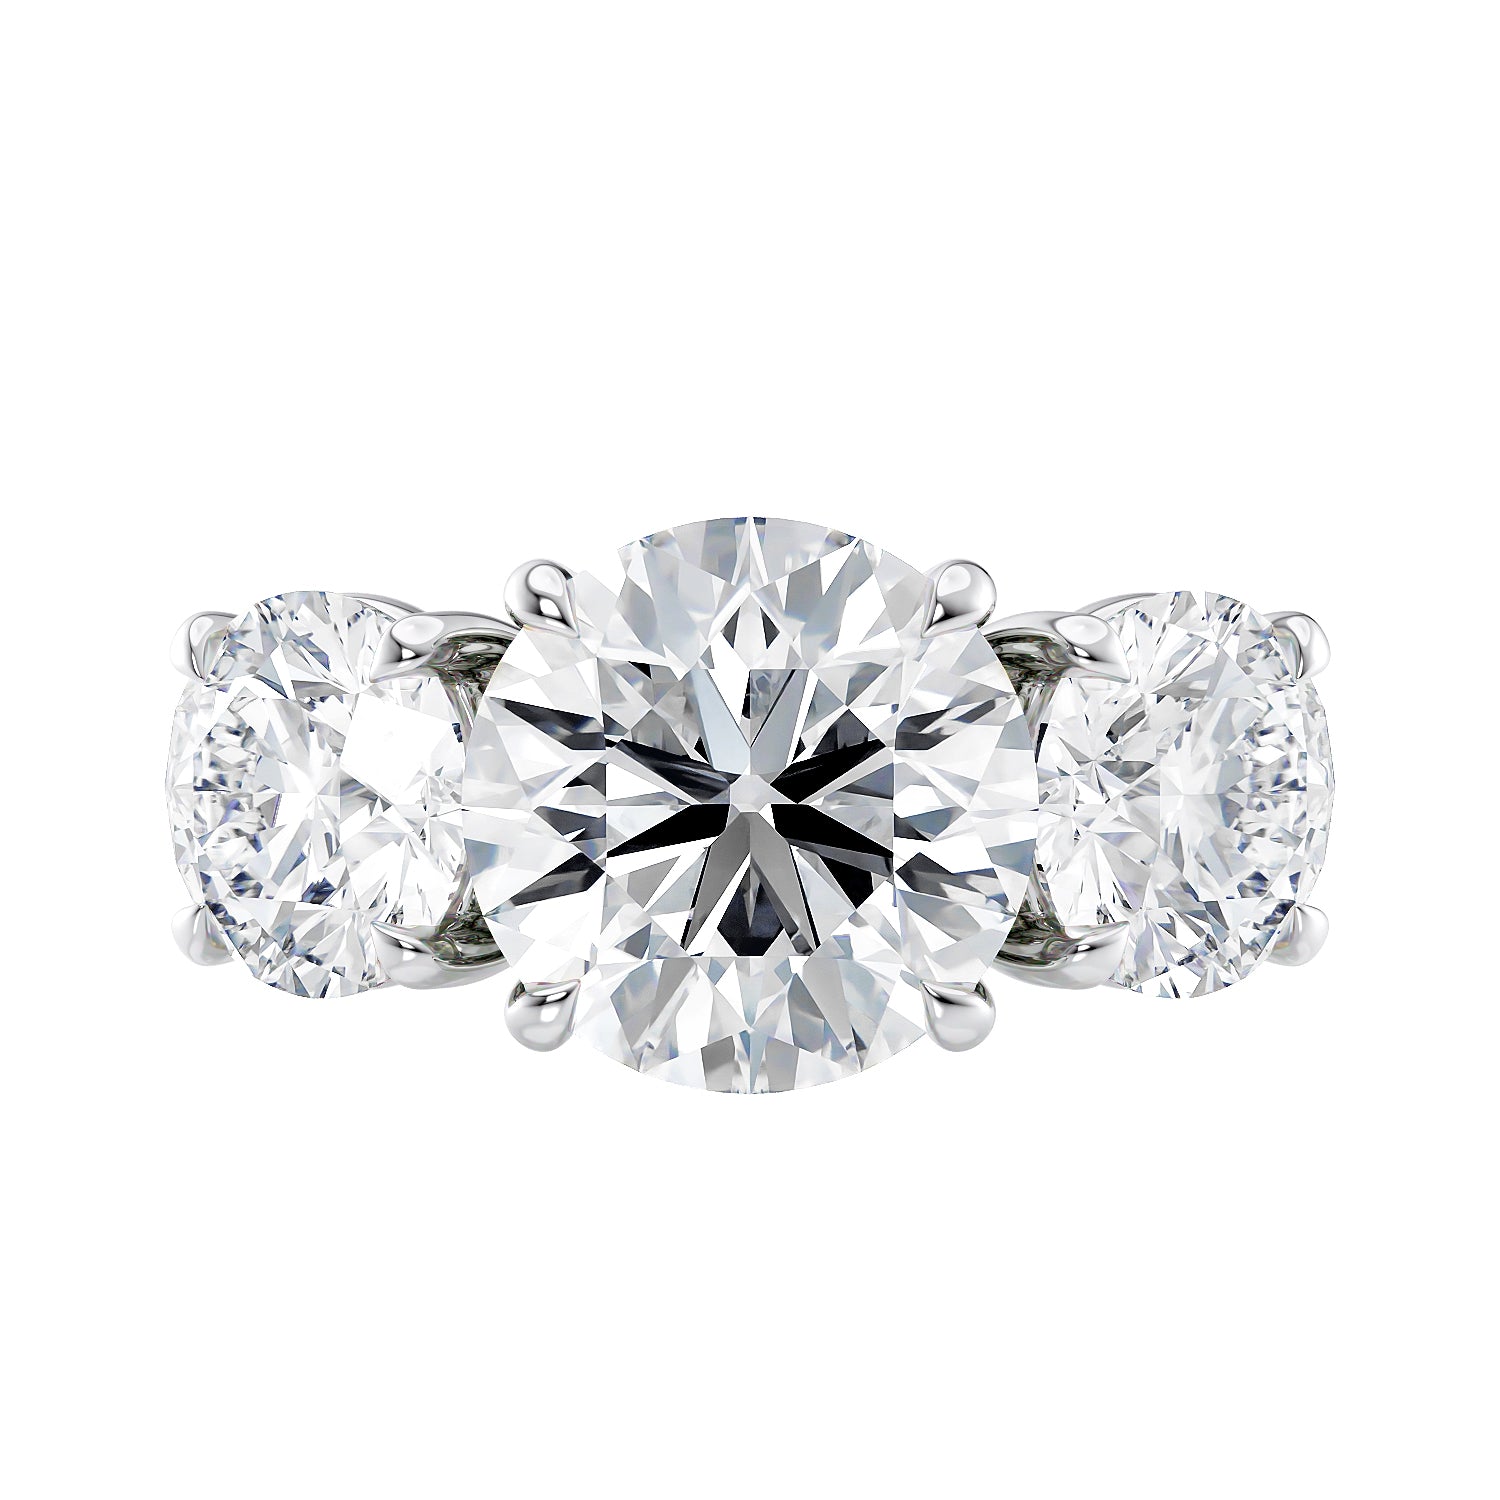 Round 2.50 carat 3 stone lab diamond engagement ring white gold front view.